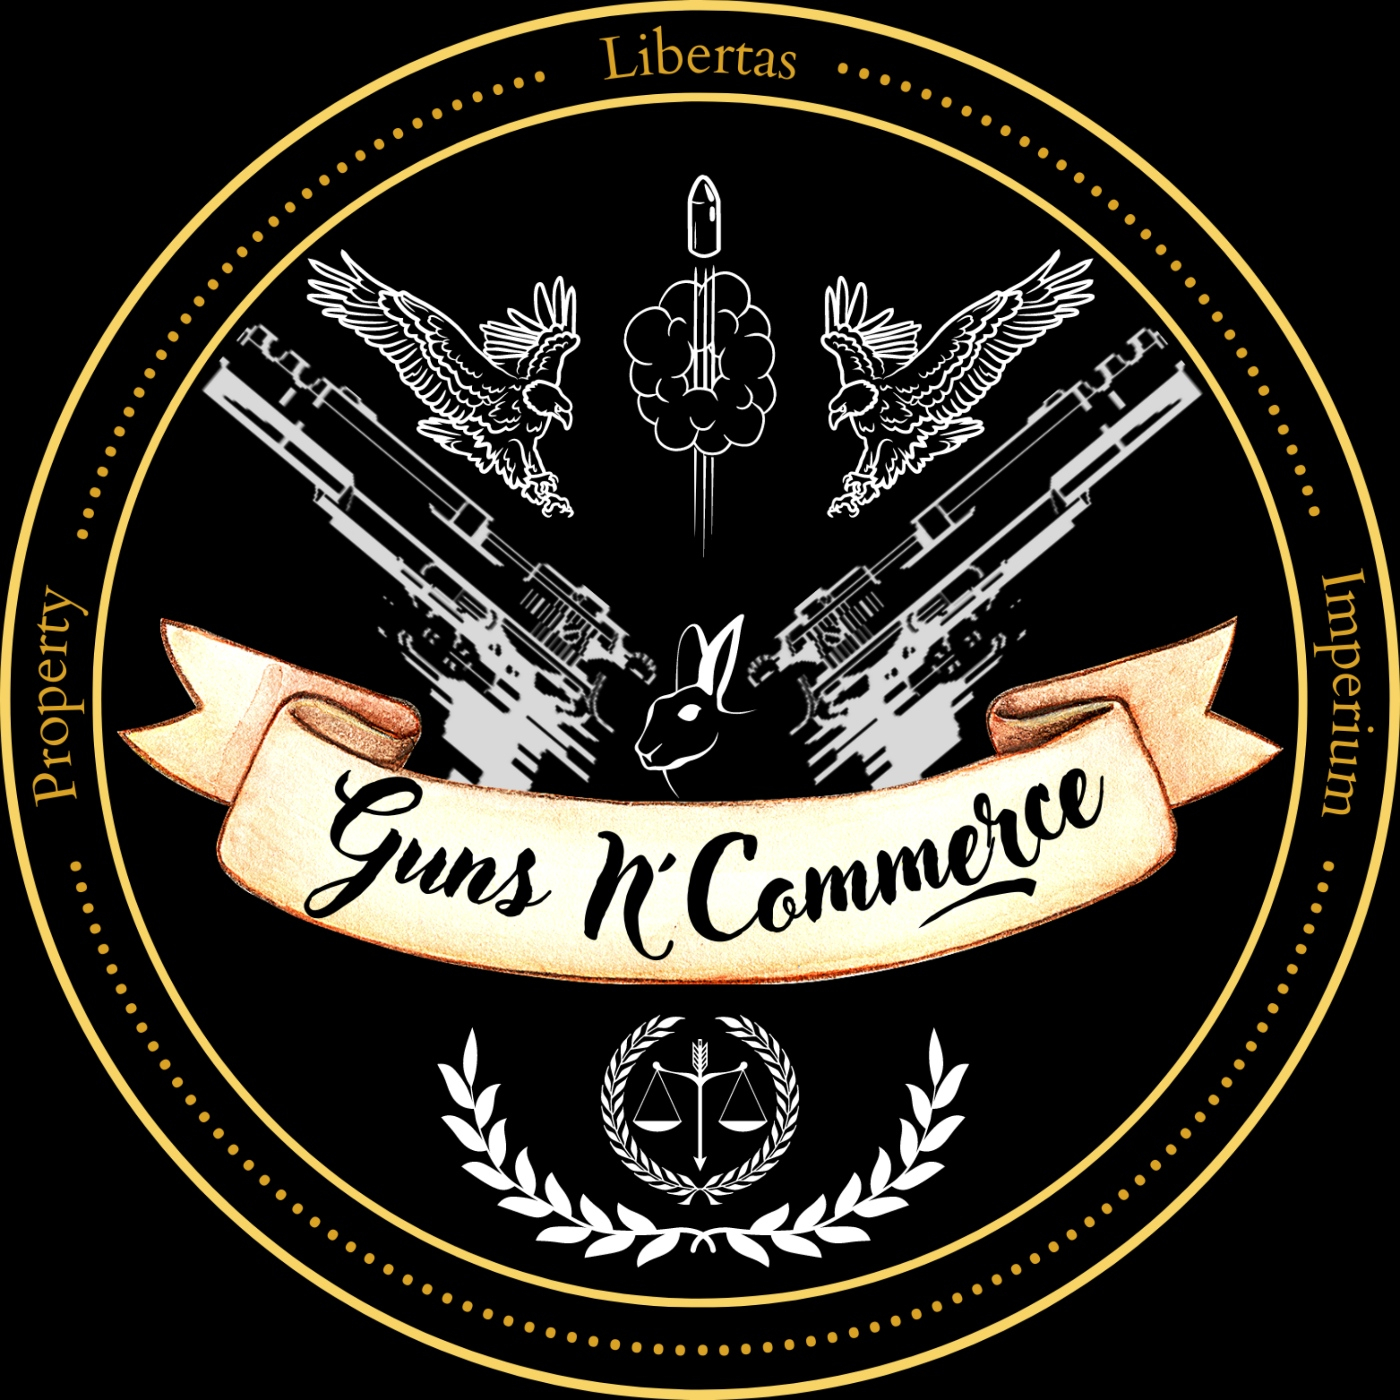 Guns N' Commerce